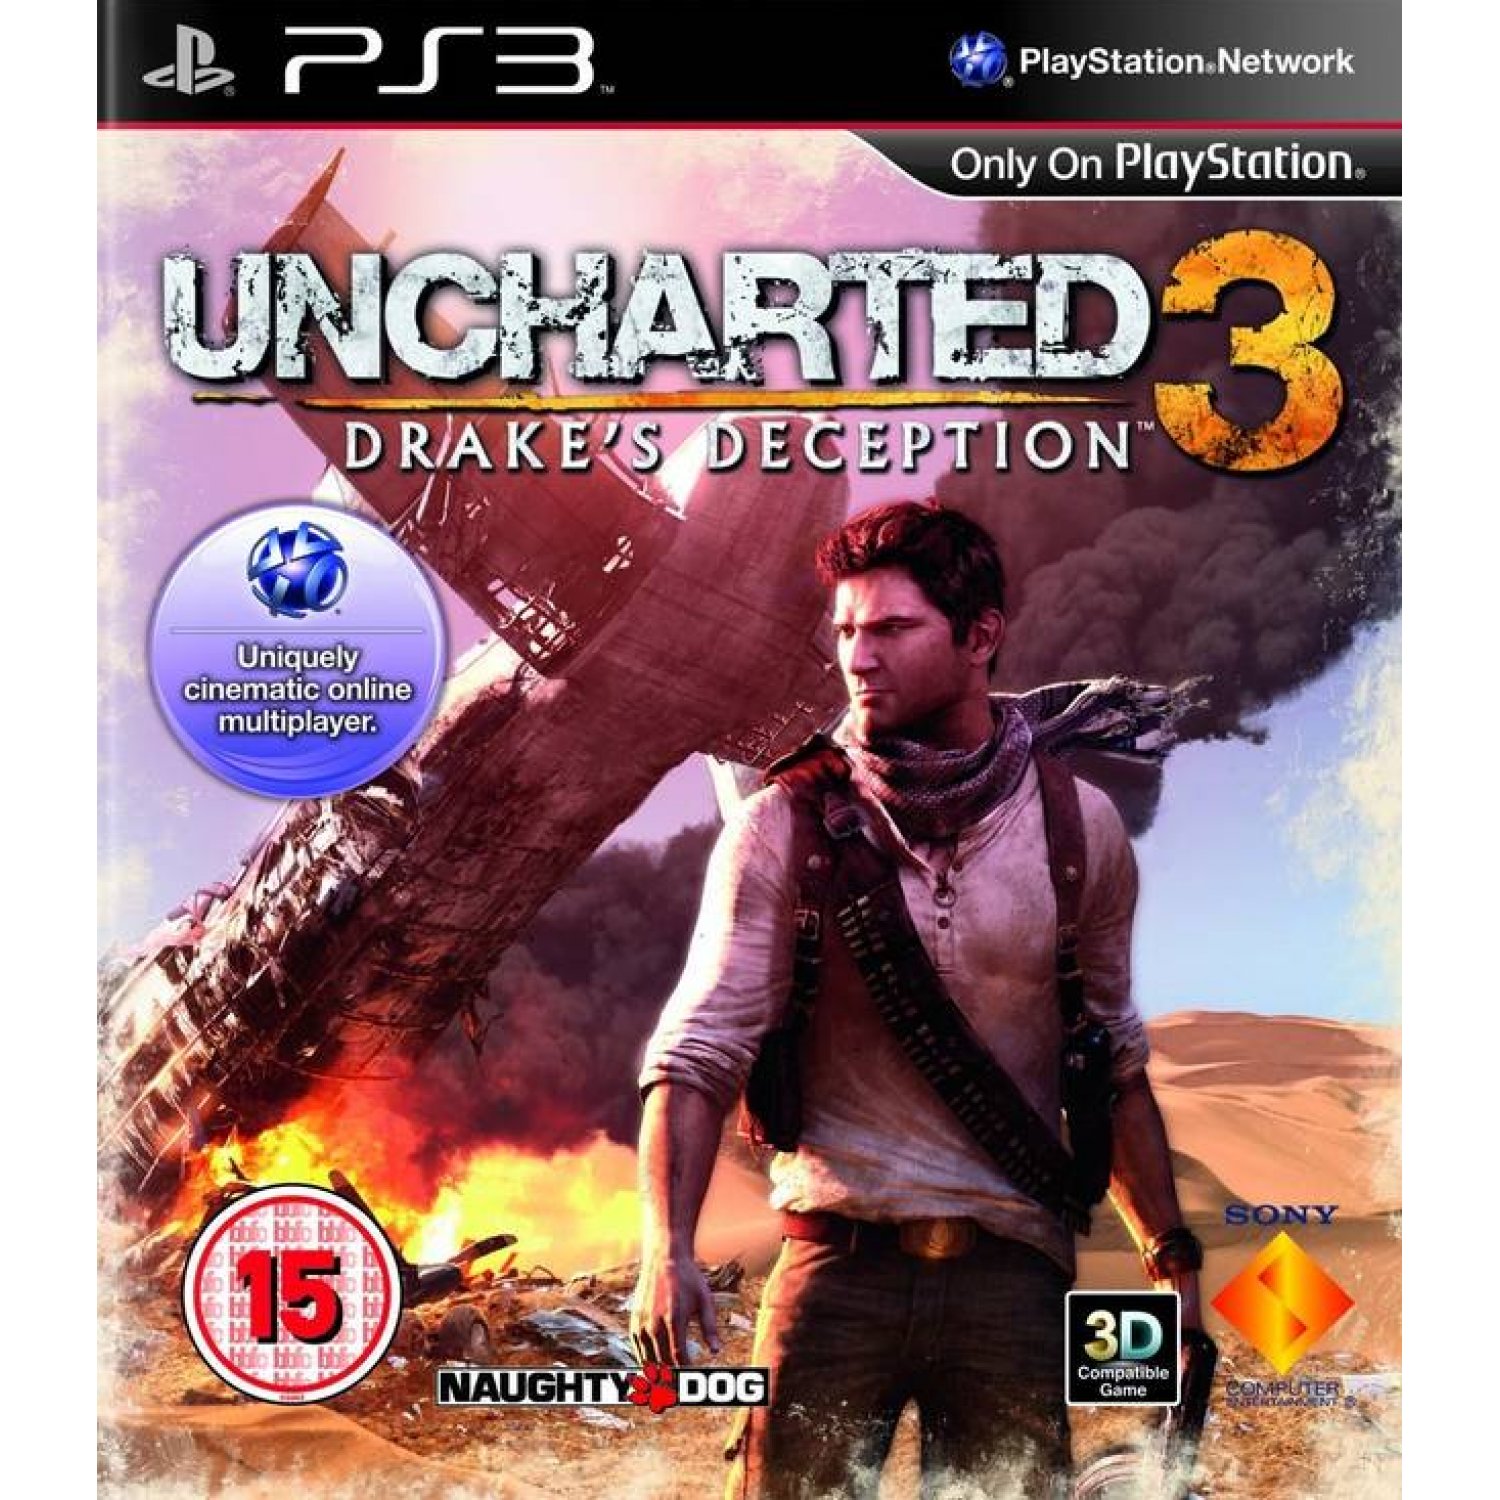 Игры сони 3 купить. Игра ps3 Uncharted 3: Drake’s Deception диск. Uncharted 3 иллюзии Дрейка ps3. Обложка пс3 анчартед. Анчартед 3 диск пс3.